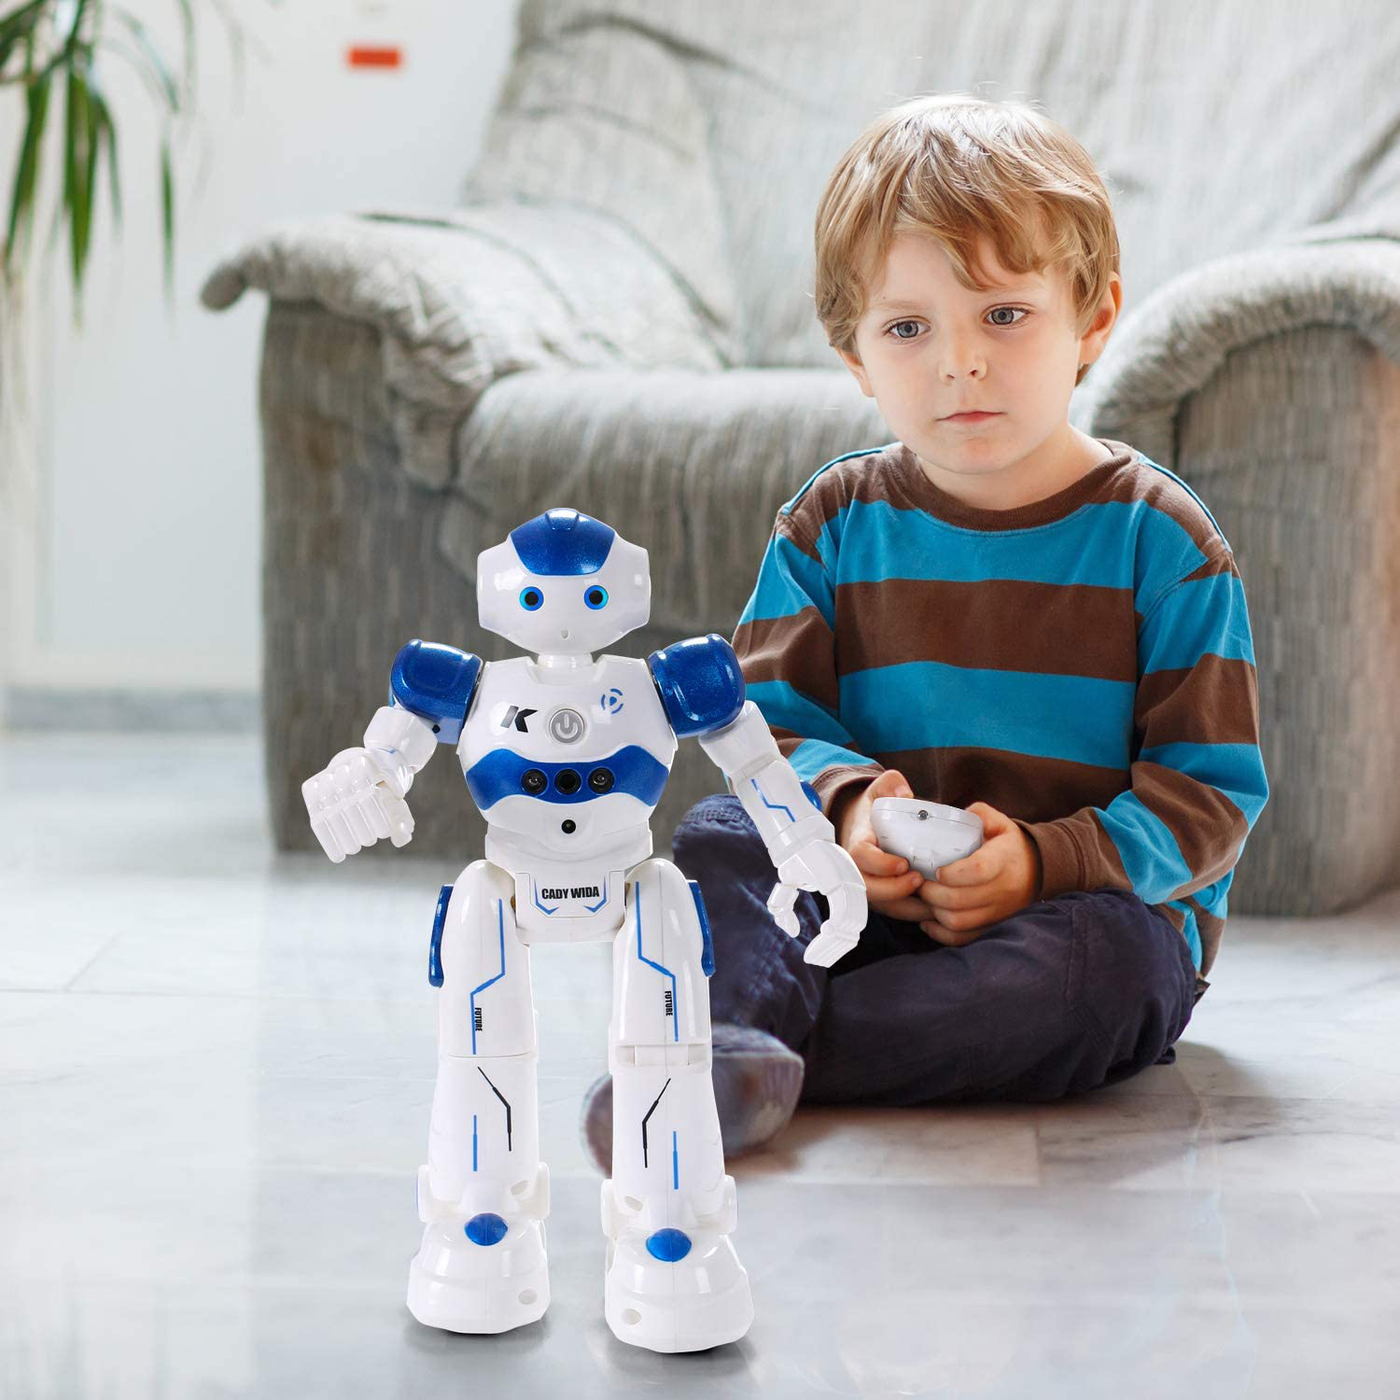 Gesture Sensing Remote Control Robot for Kids